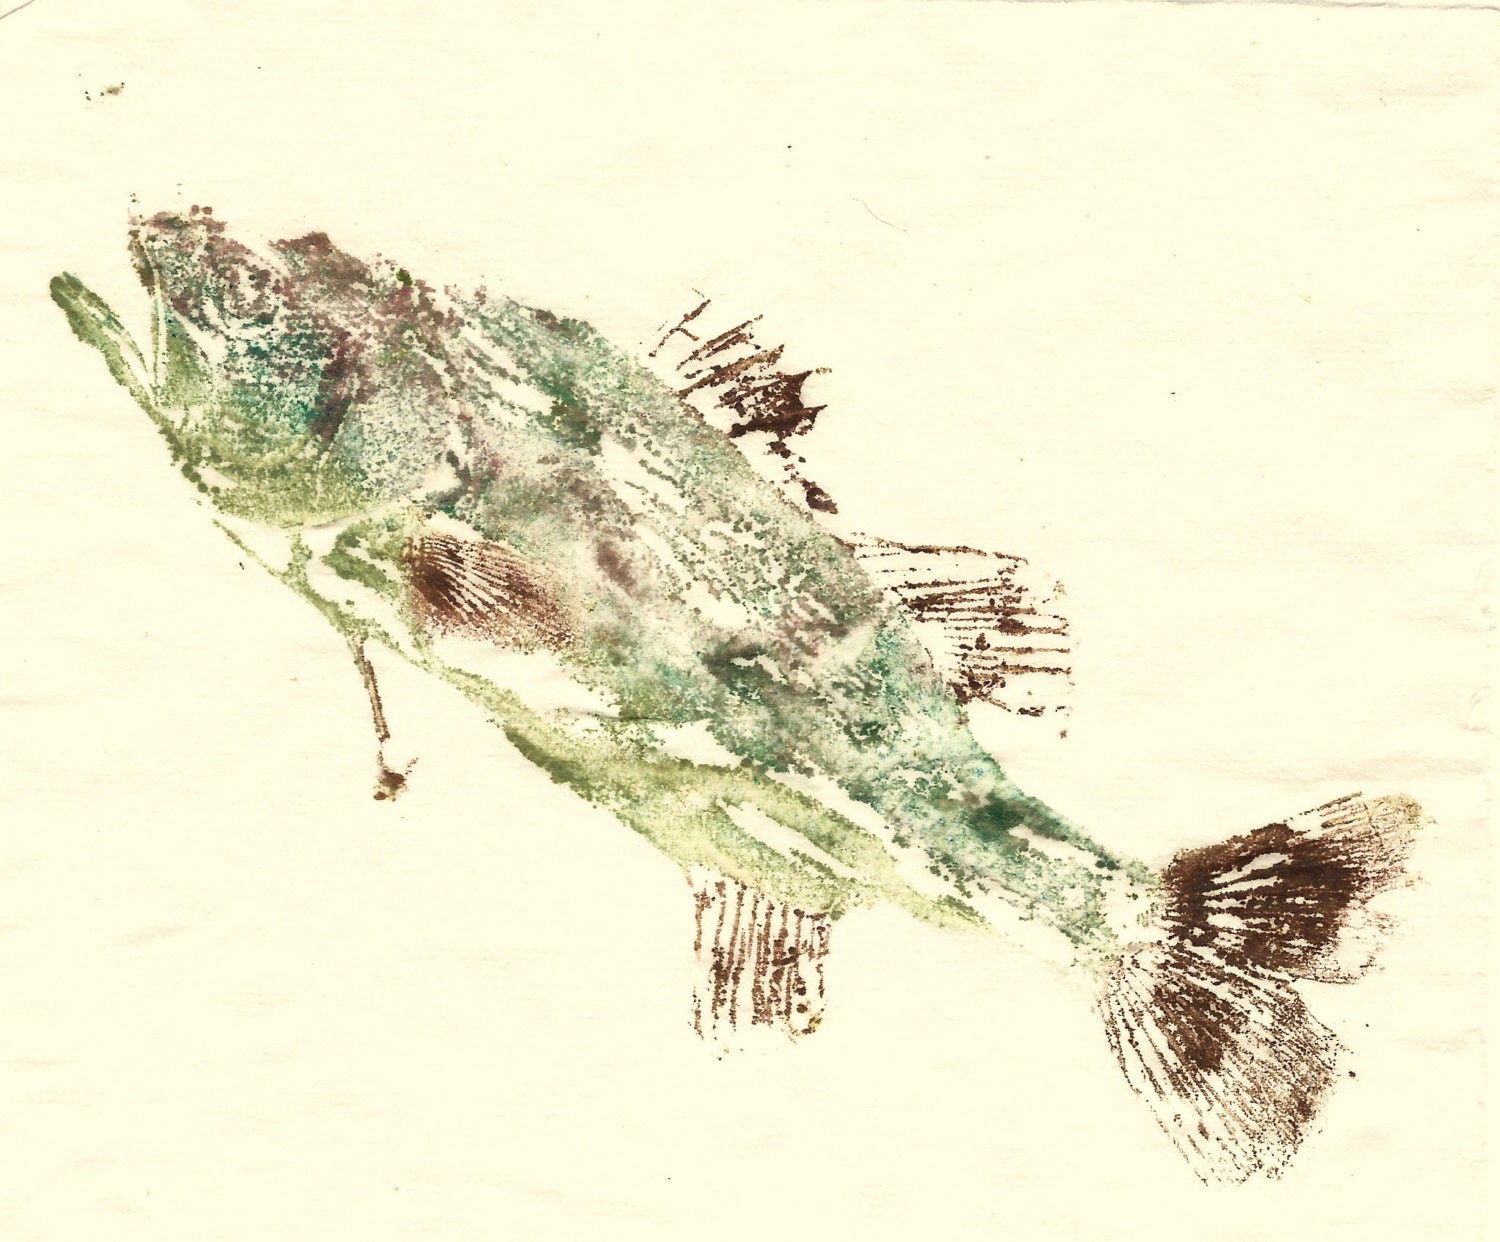 Bass Gyotaku Print by DirtyFingertips on Etsy